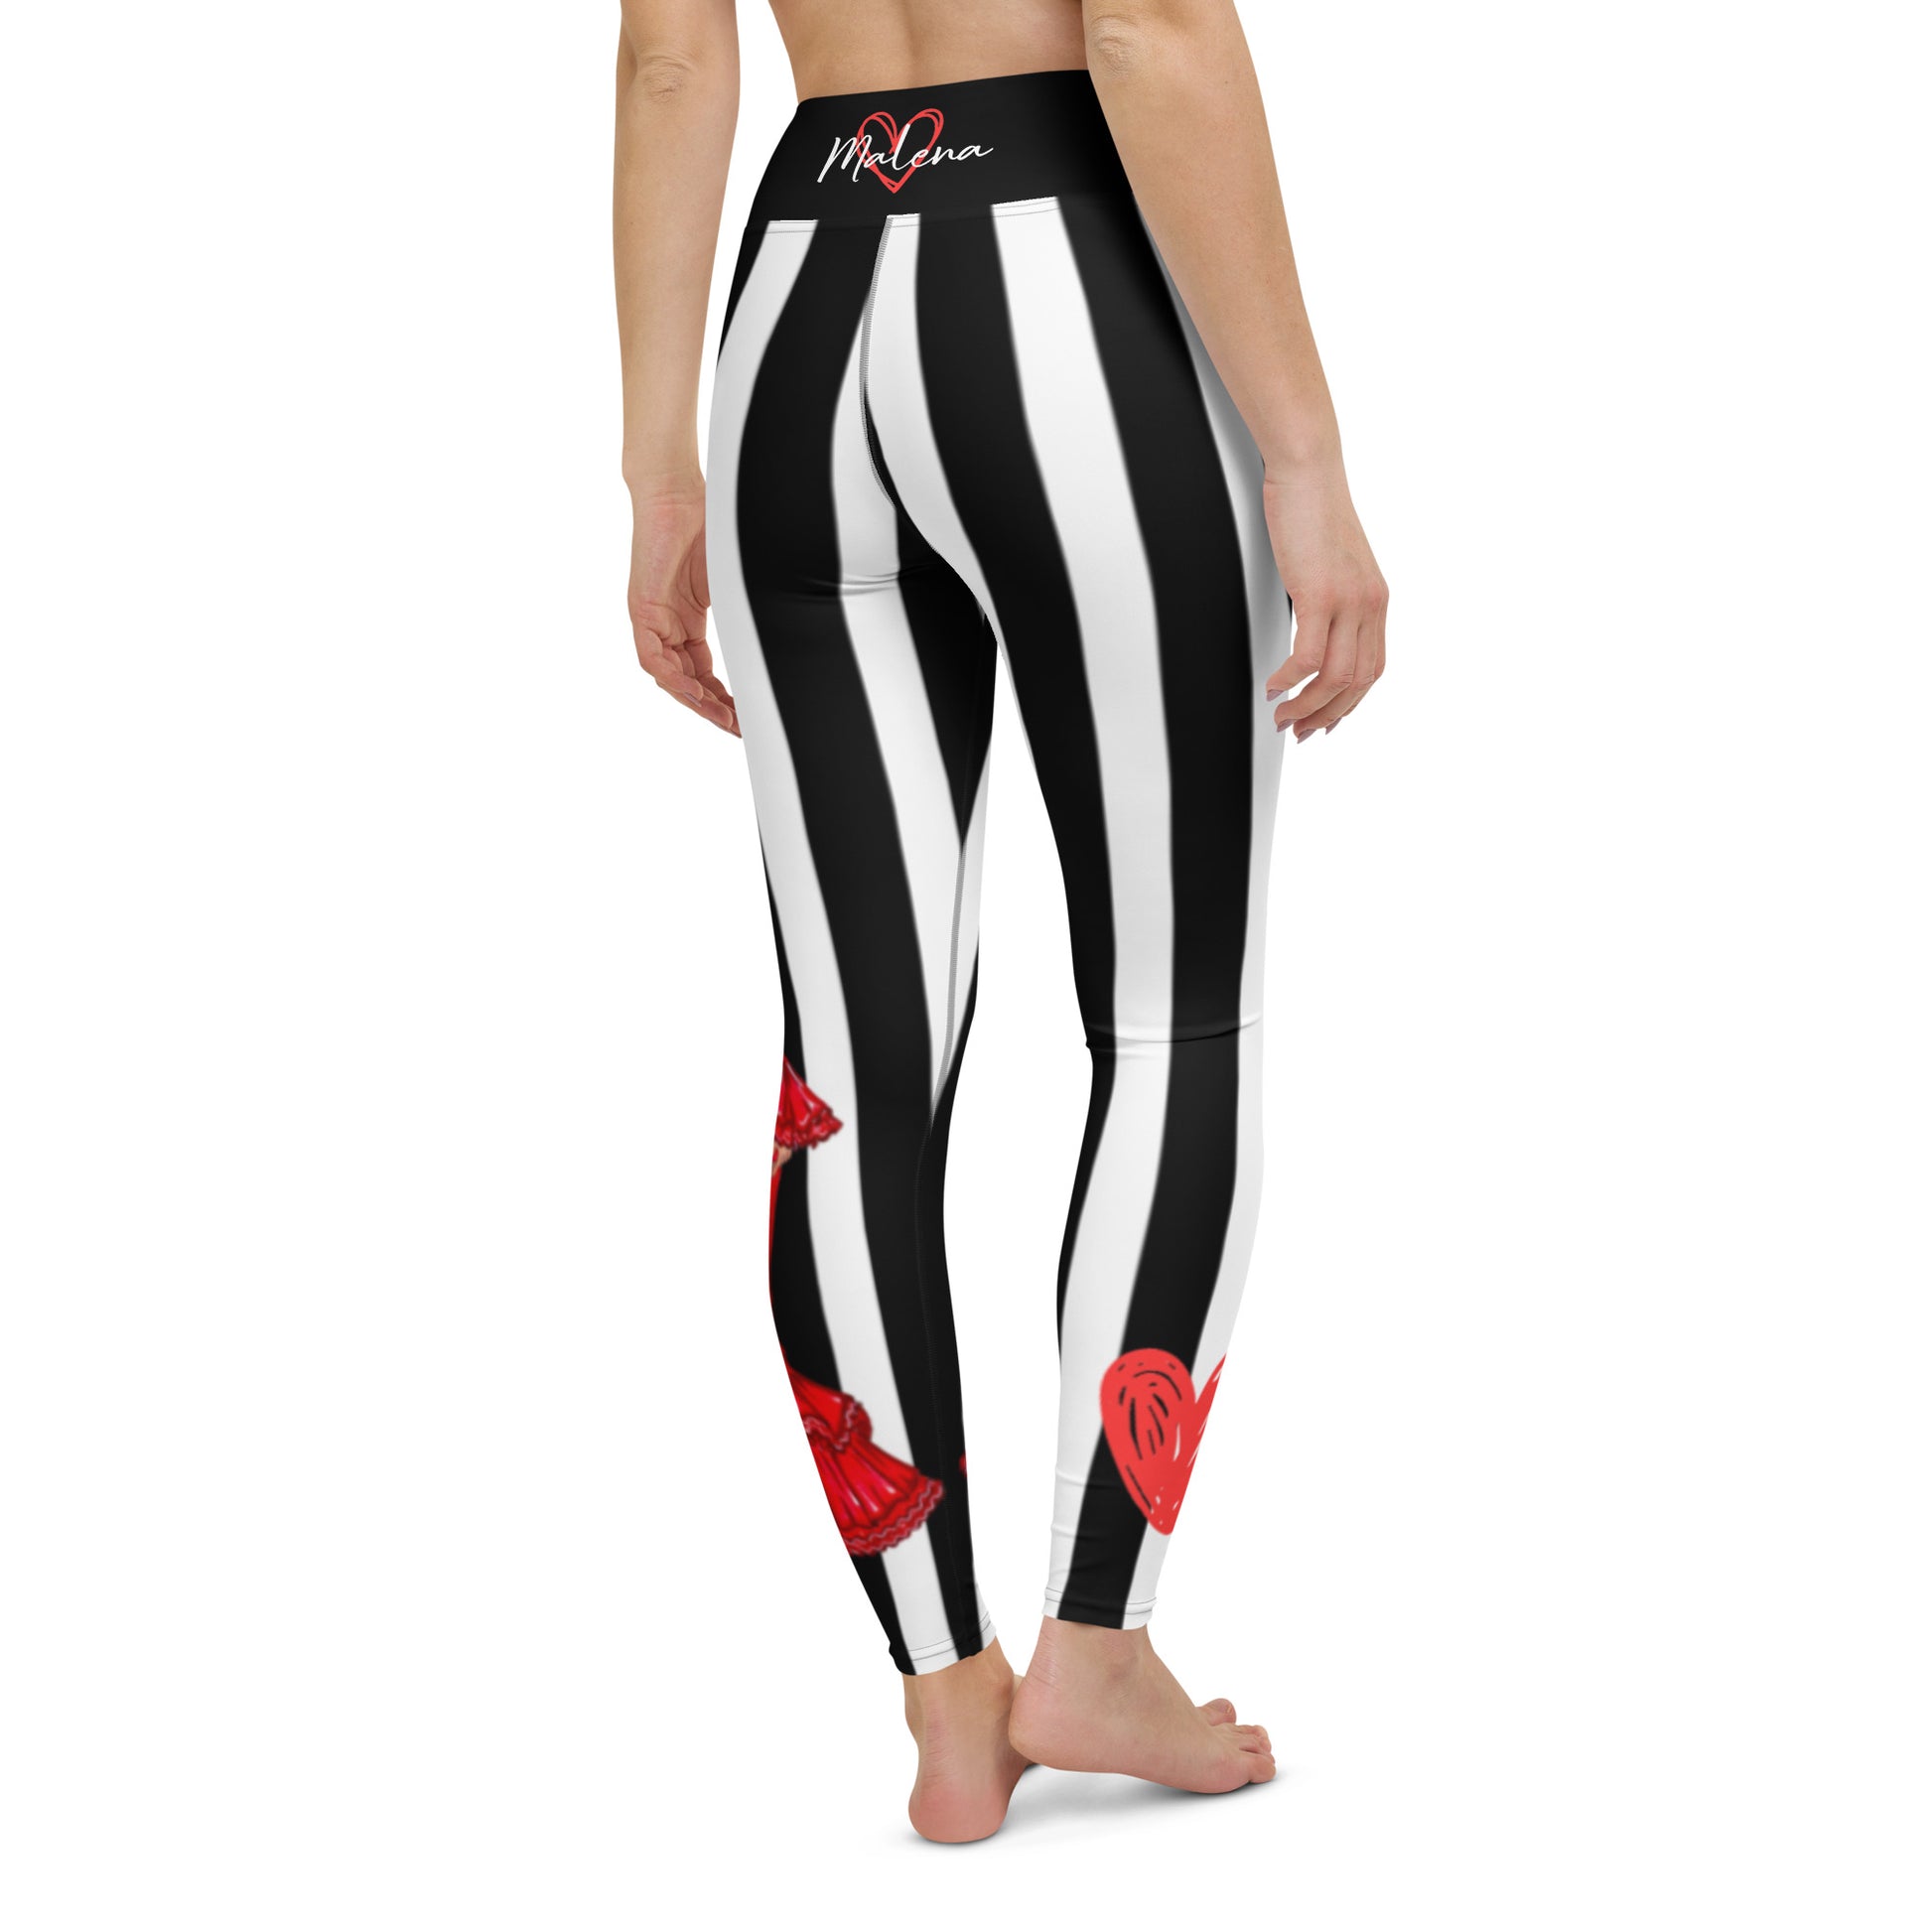 Flamenco Dancer Leggings, black and white striped high waisted yoga leggings with a red dress design - IllustrArte